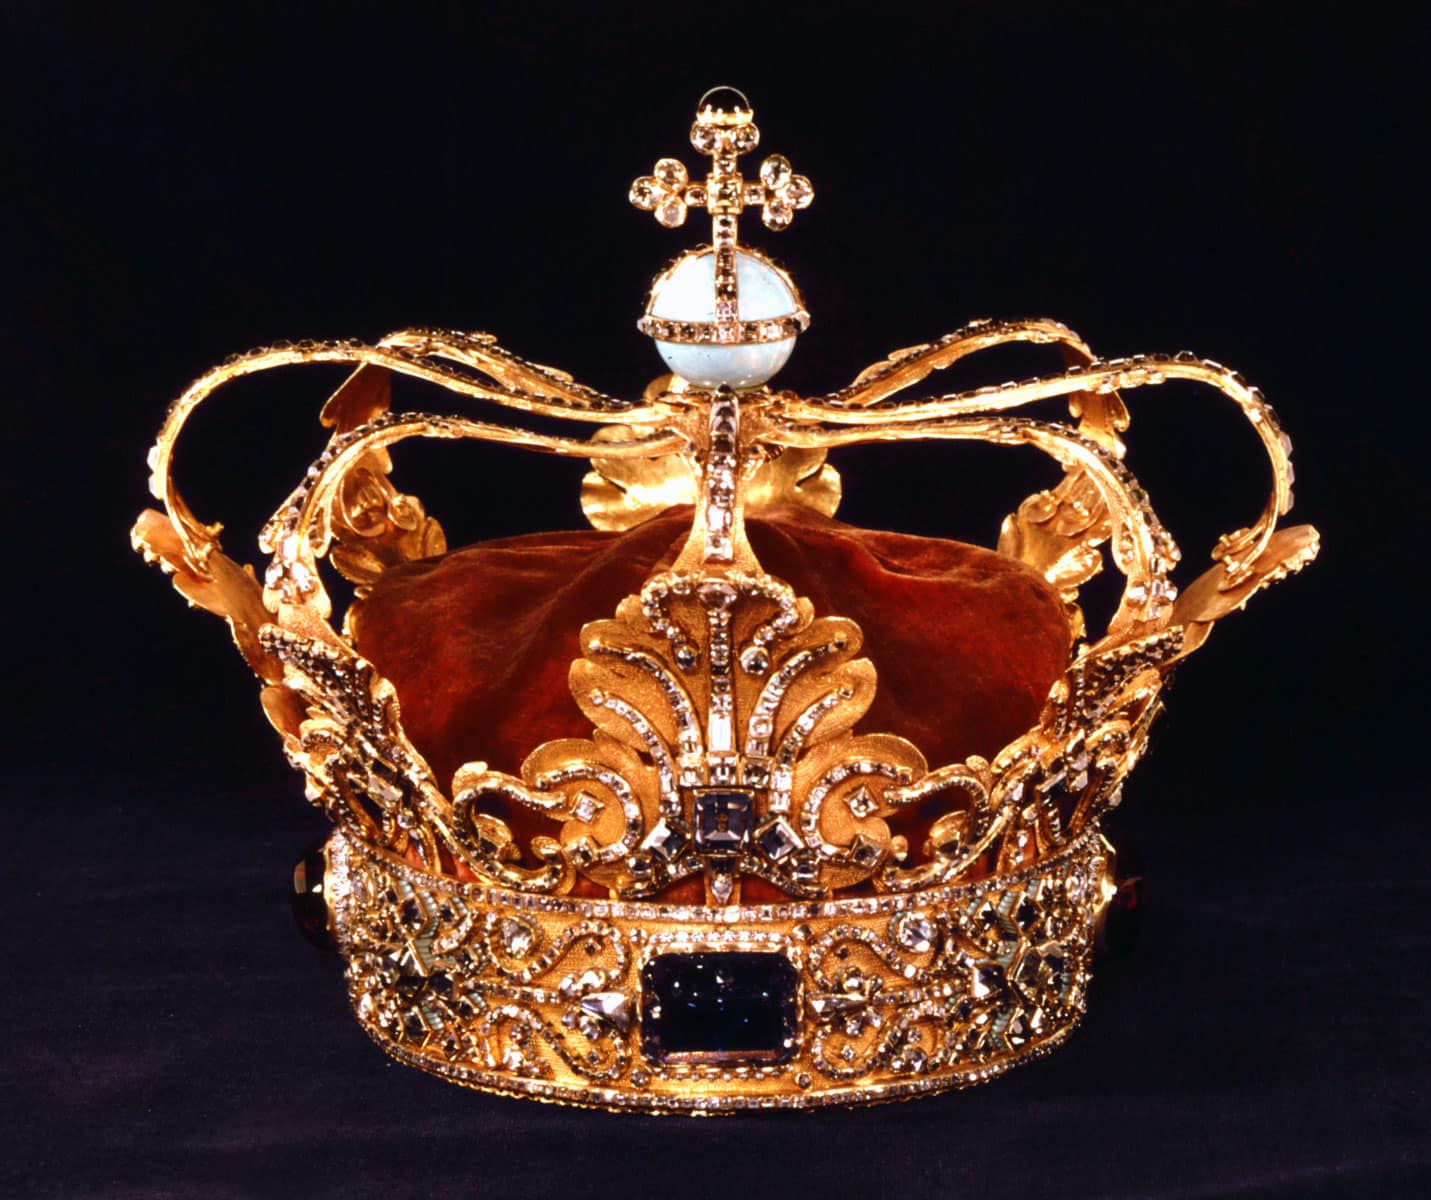 crown Denmark helmet form enamel gold stones 1670